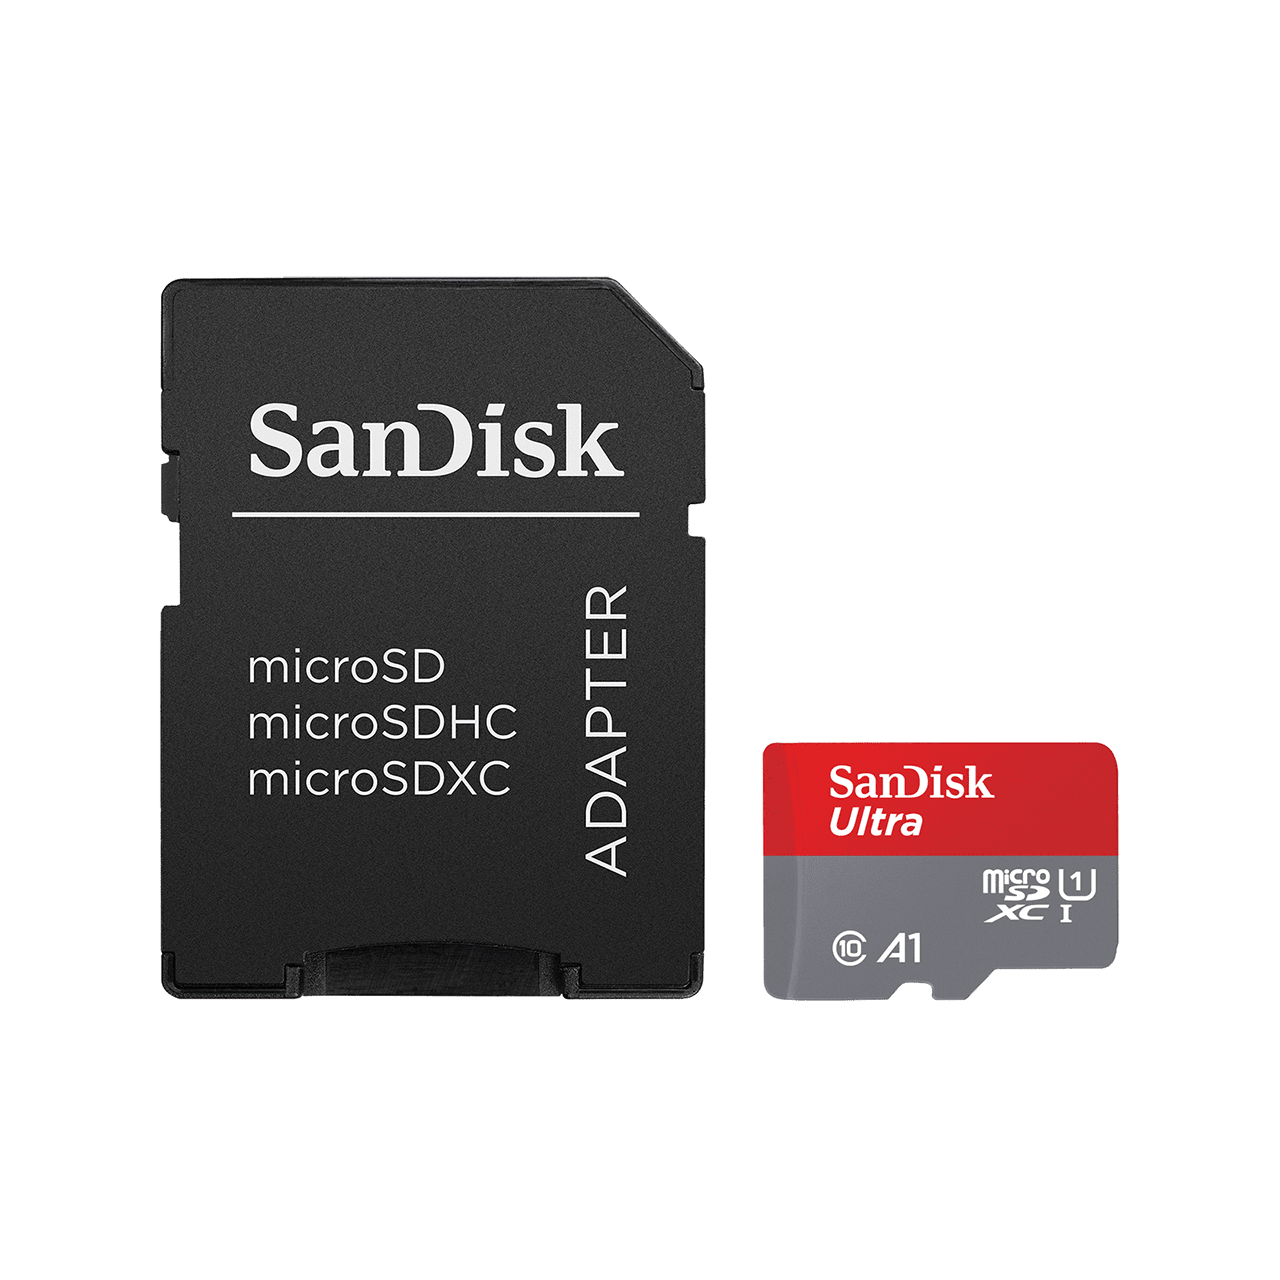 SanDisk Ultra® microSD | Western Digital